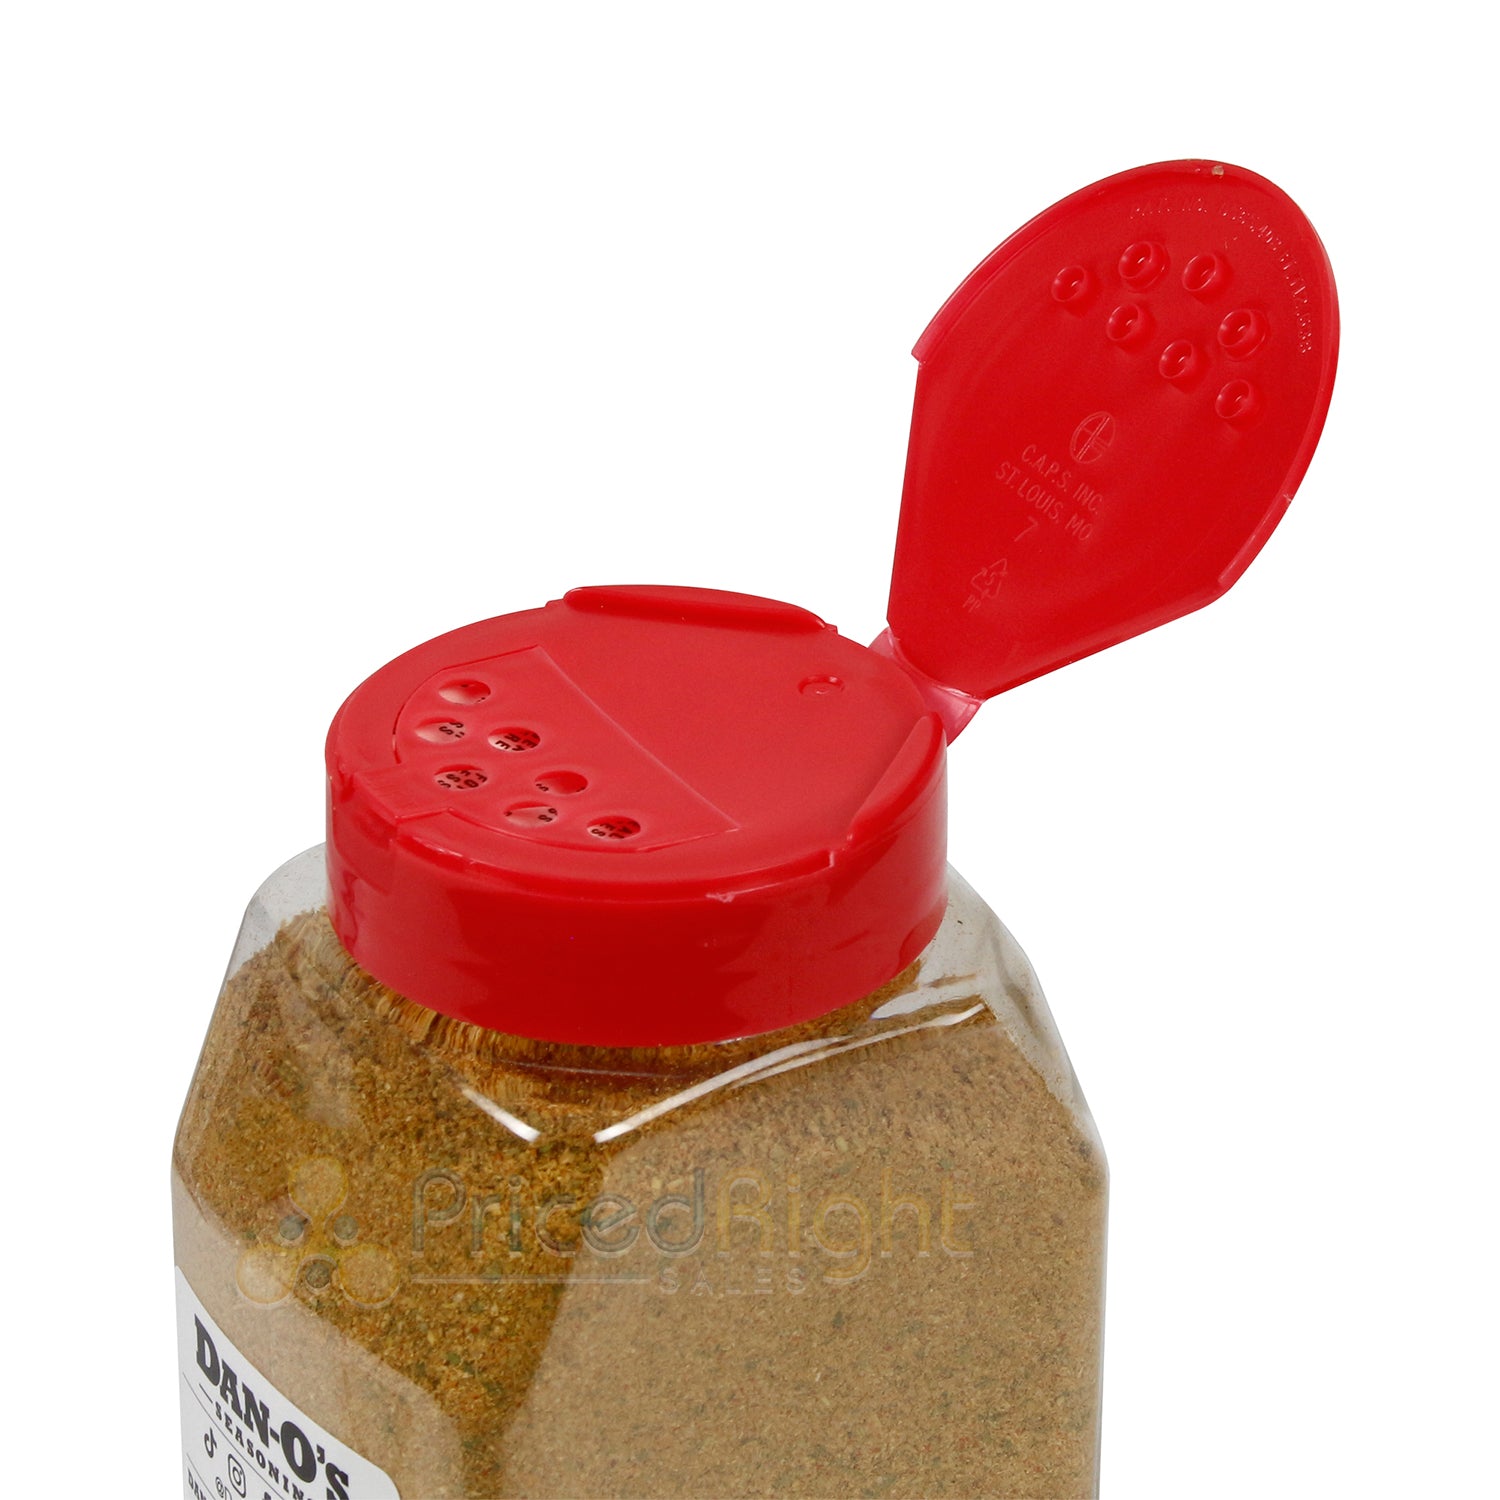 Dan-O's Spicy Original All-Purpose Low Sodium Seasoning Gluten-Free No –  Pricedrightsales